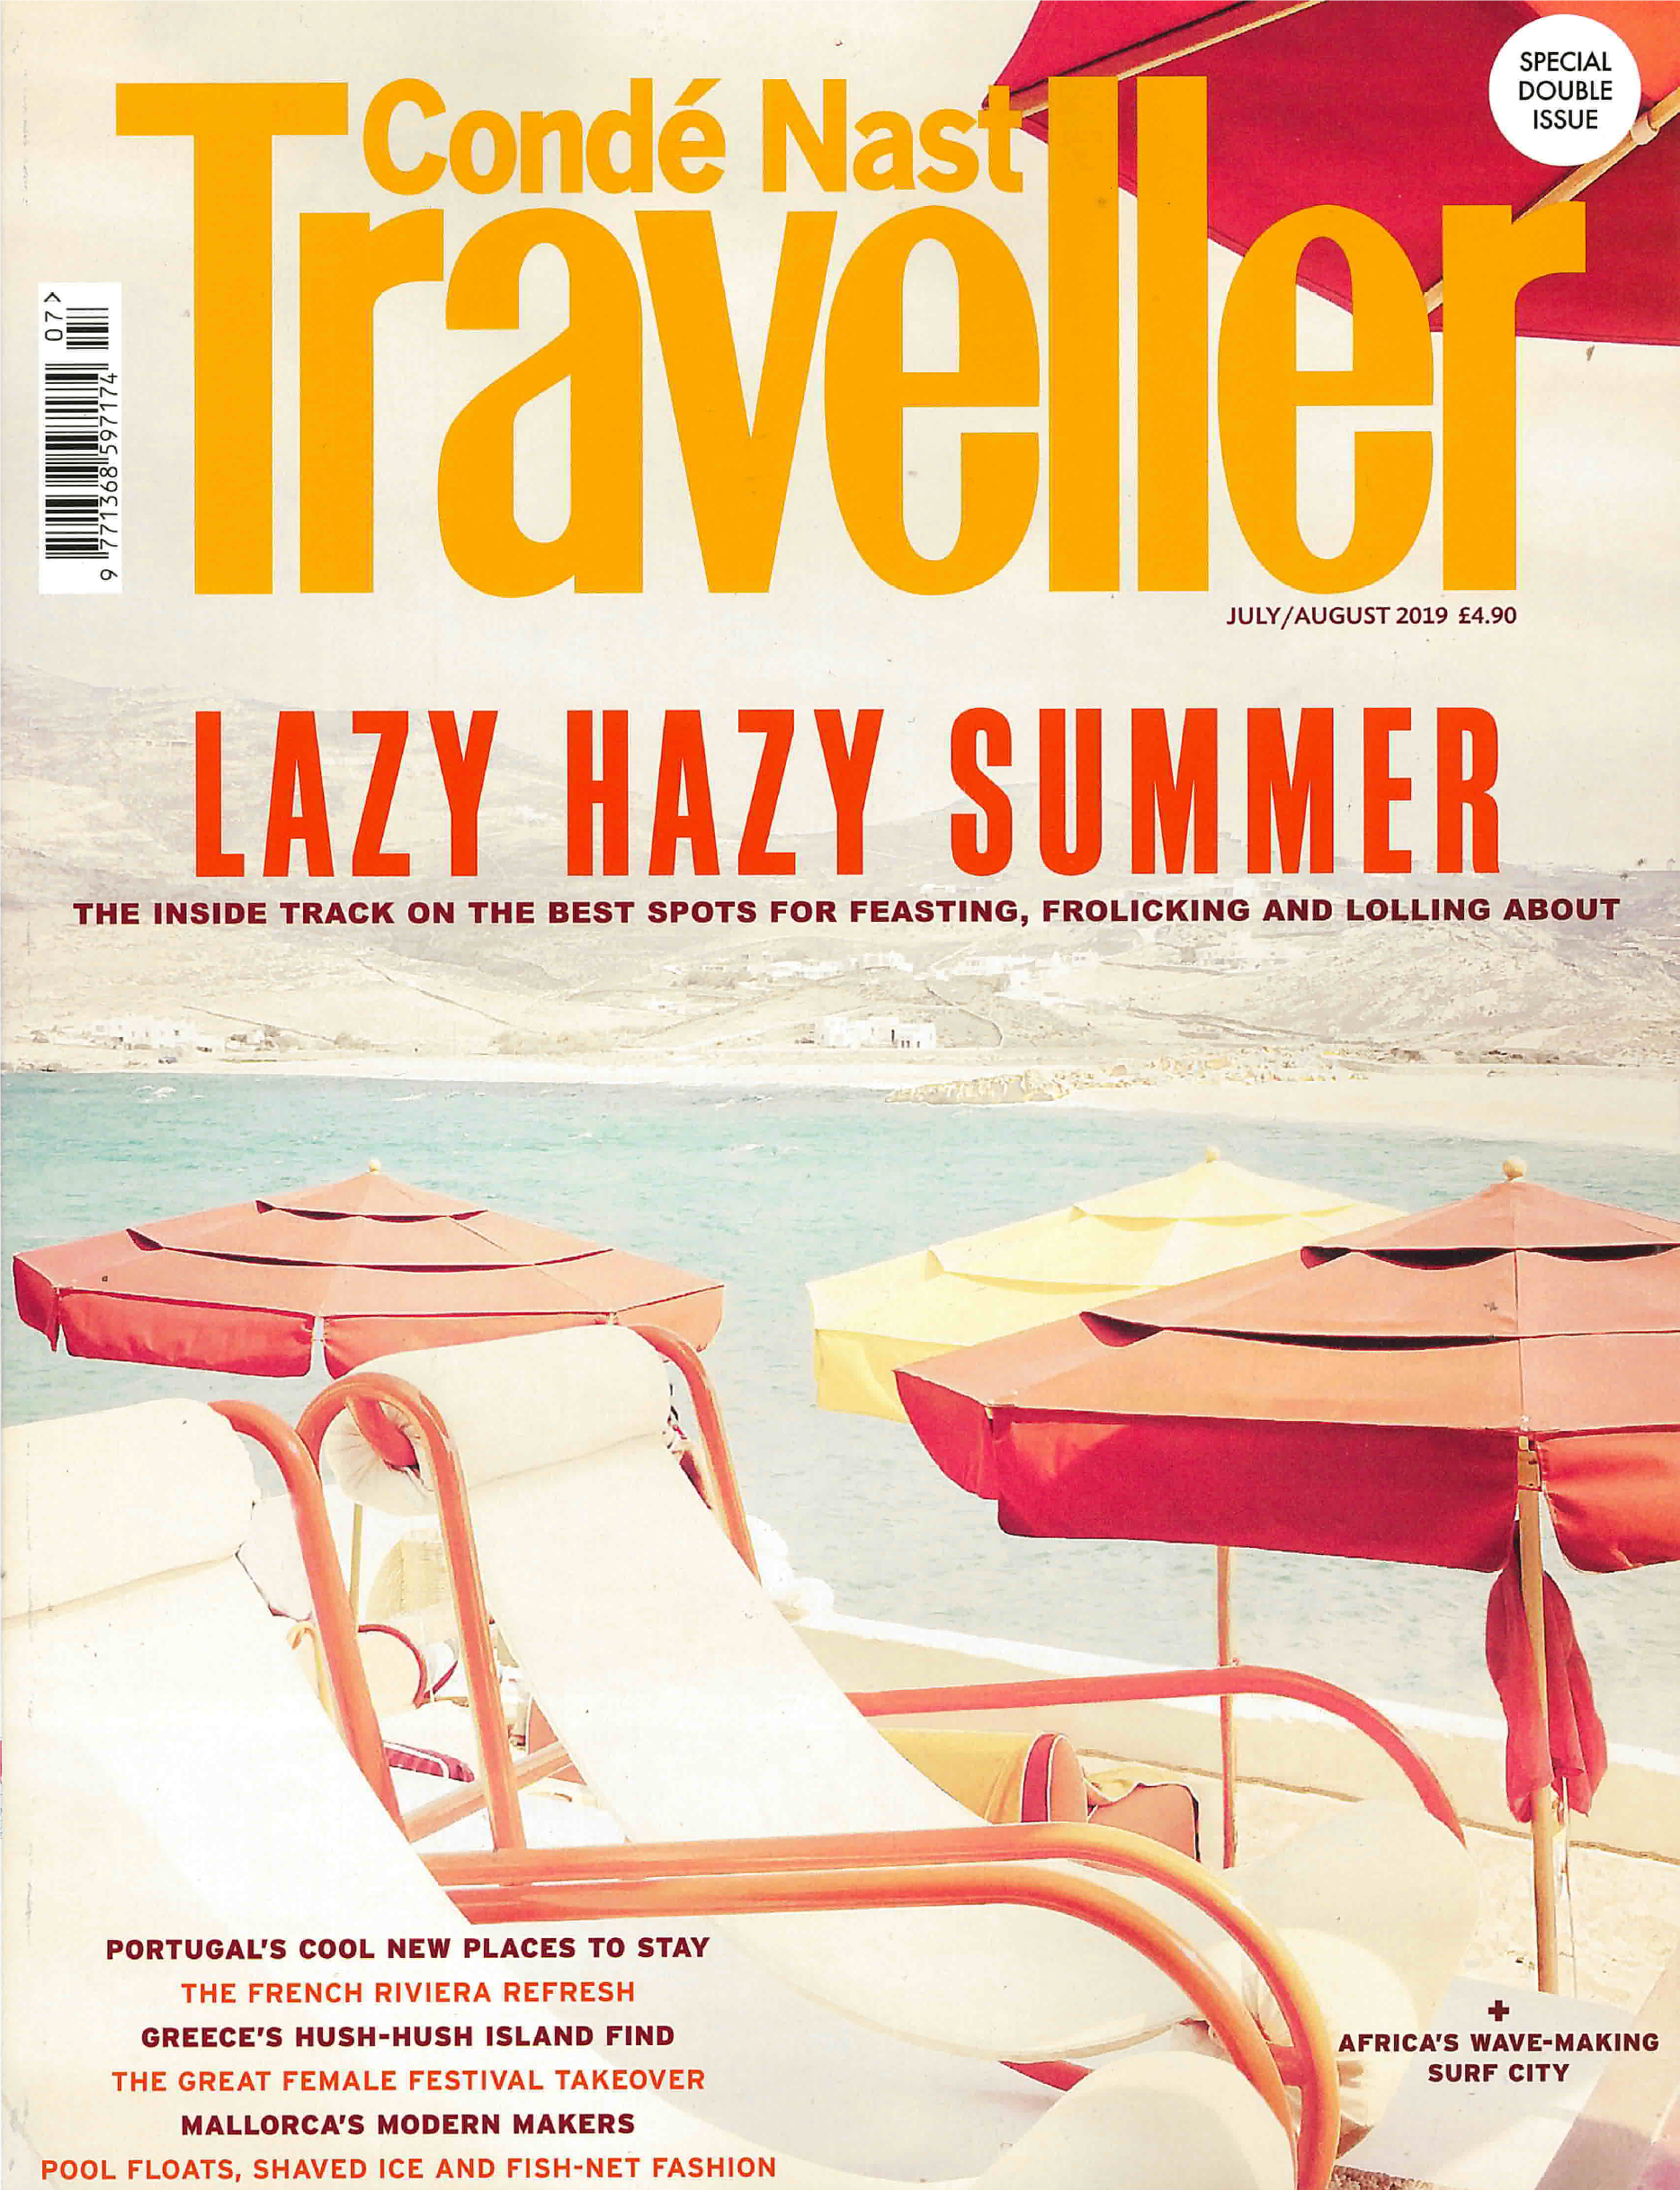 Summer must haves Traveller Conde Nast